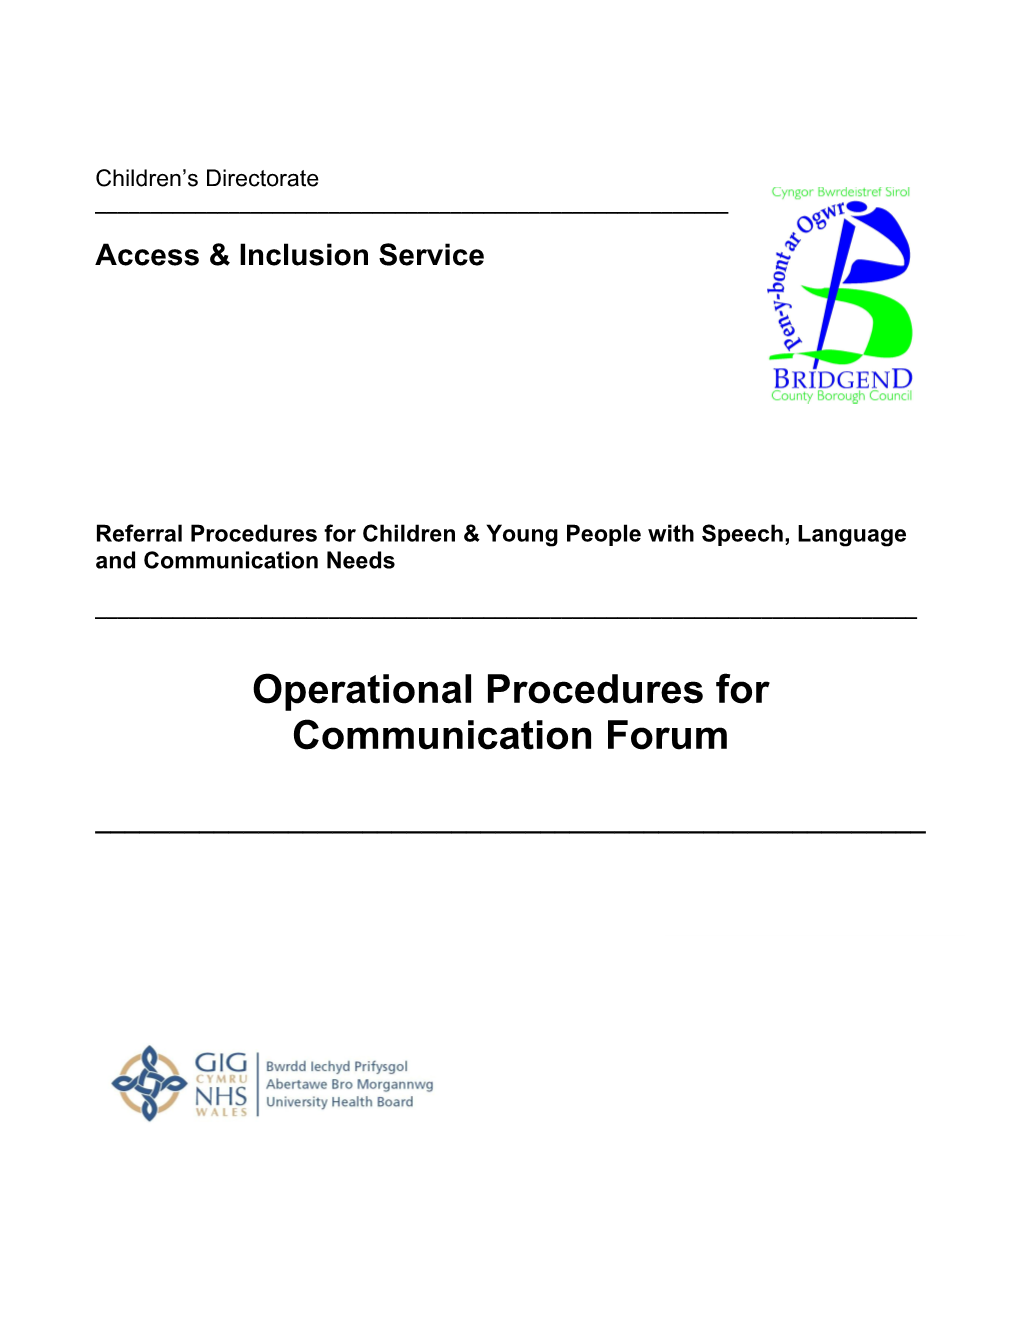 Operational Procedures for Communication Forum